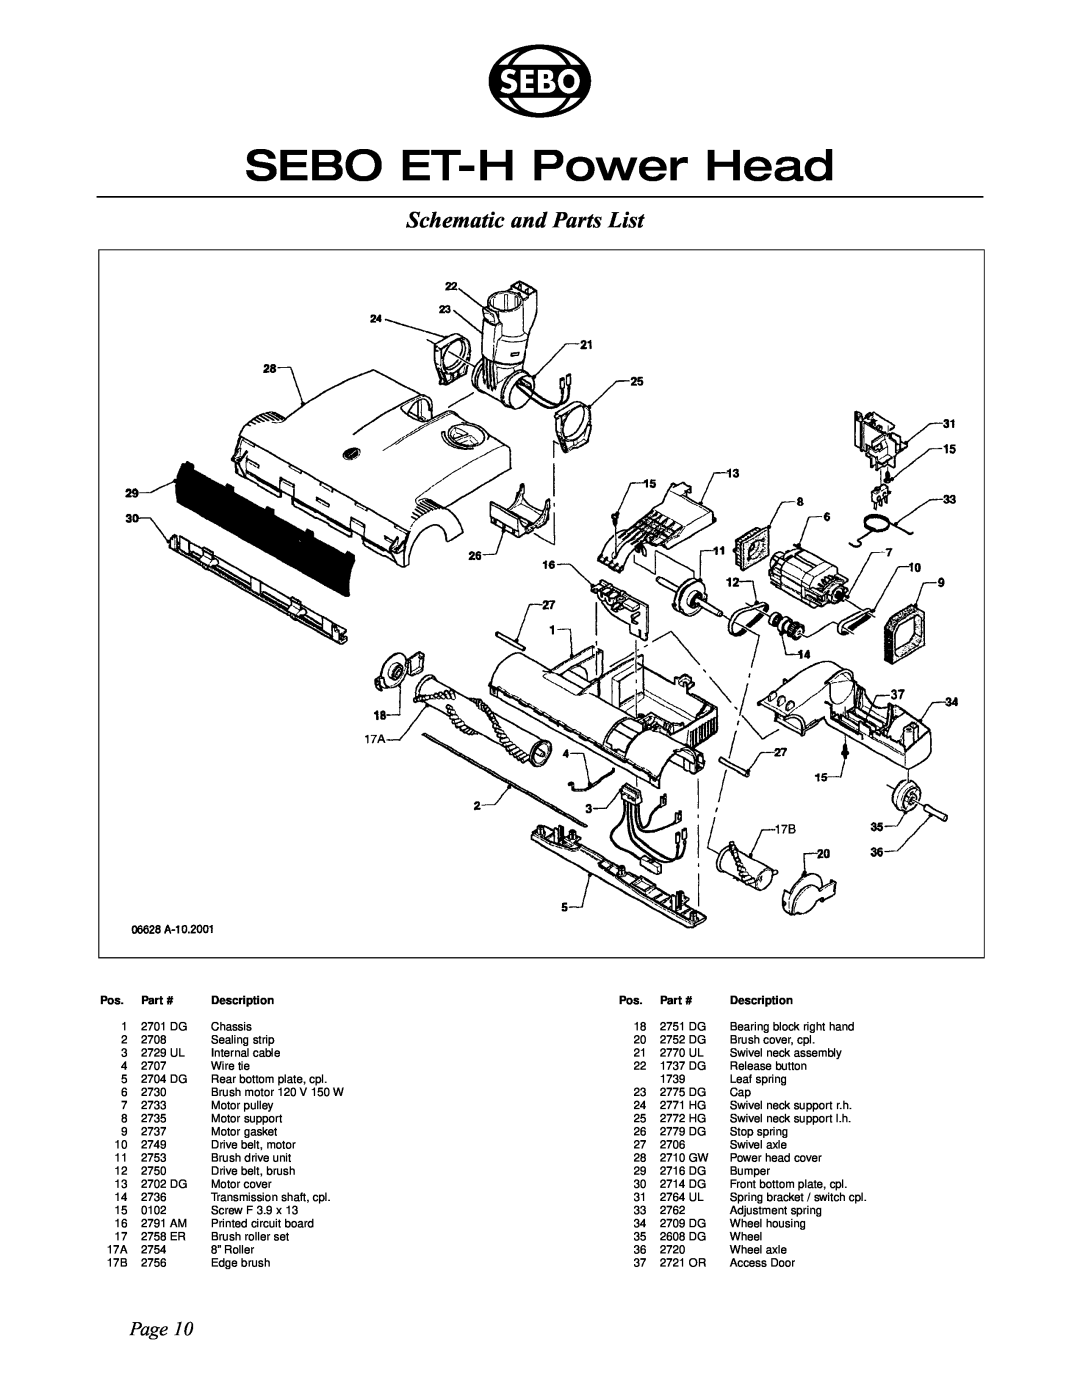 Sebo manual SEBO ET-H Power Head, Schematic and Parts List, Page, Description 